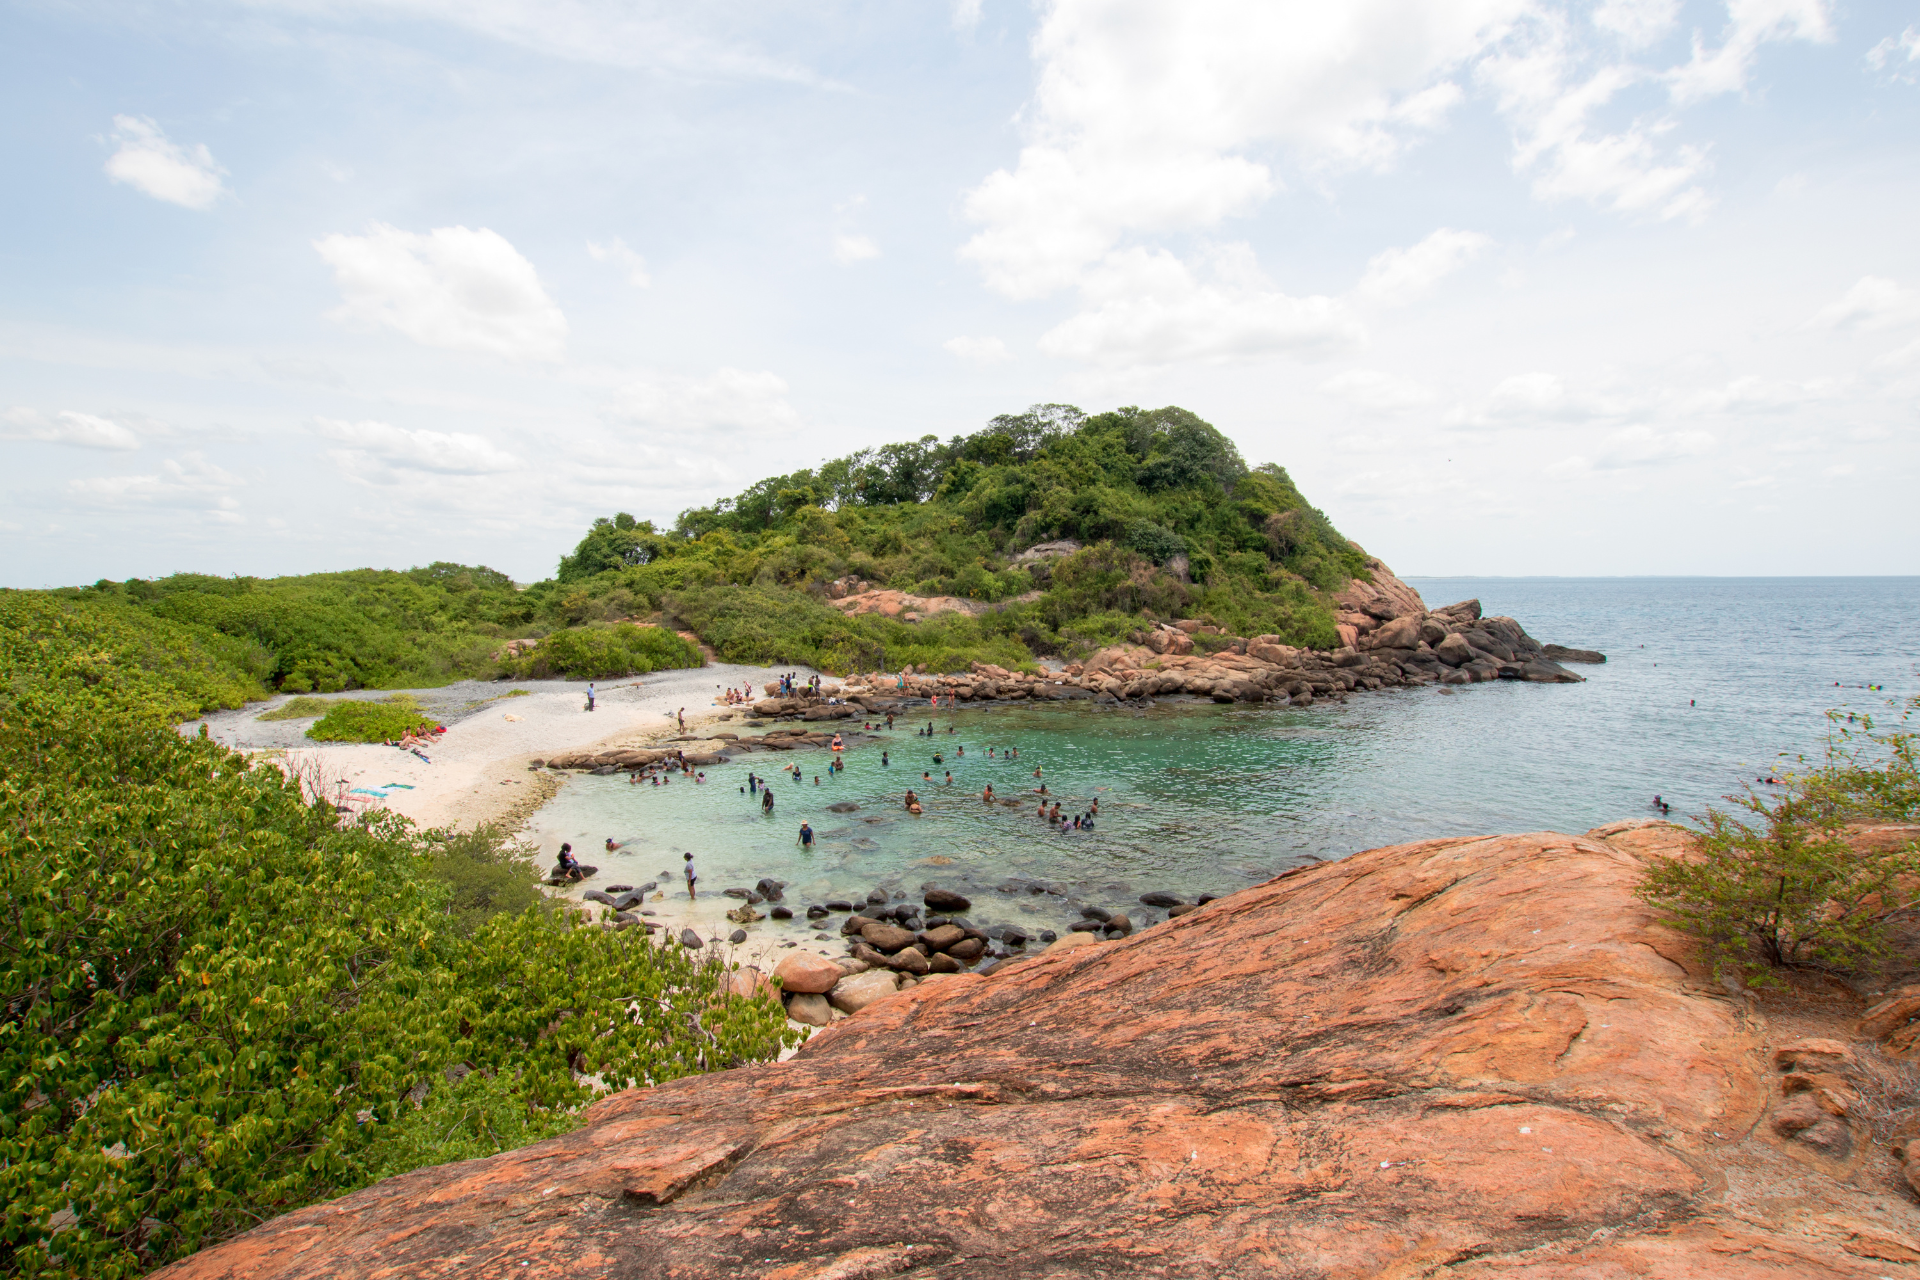 People bathing in the sea near Pigeon island in Trincomalee, Sri Lanka